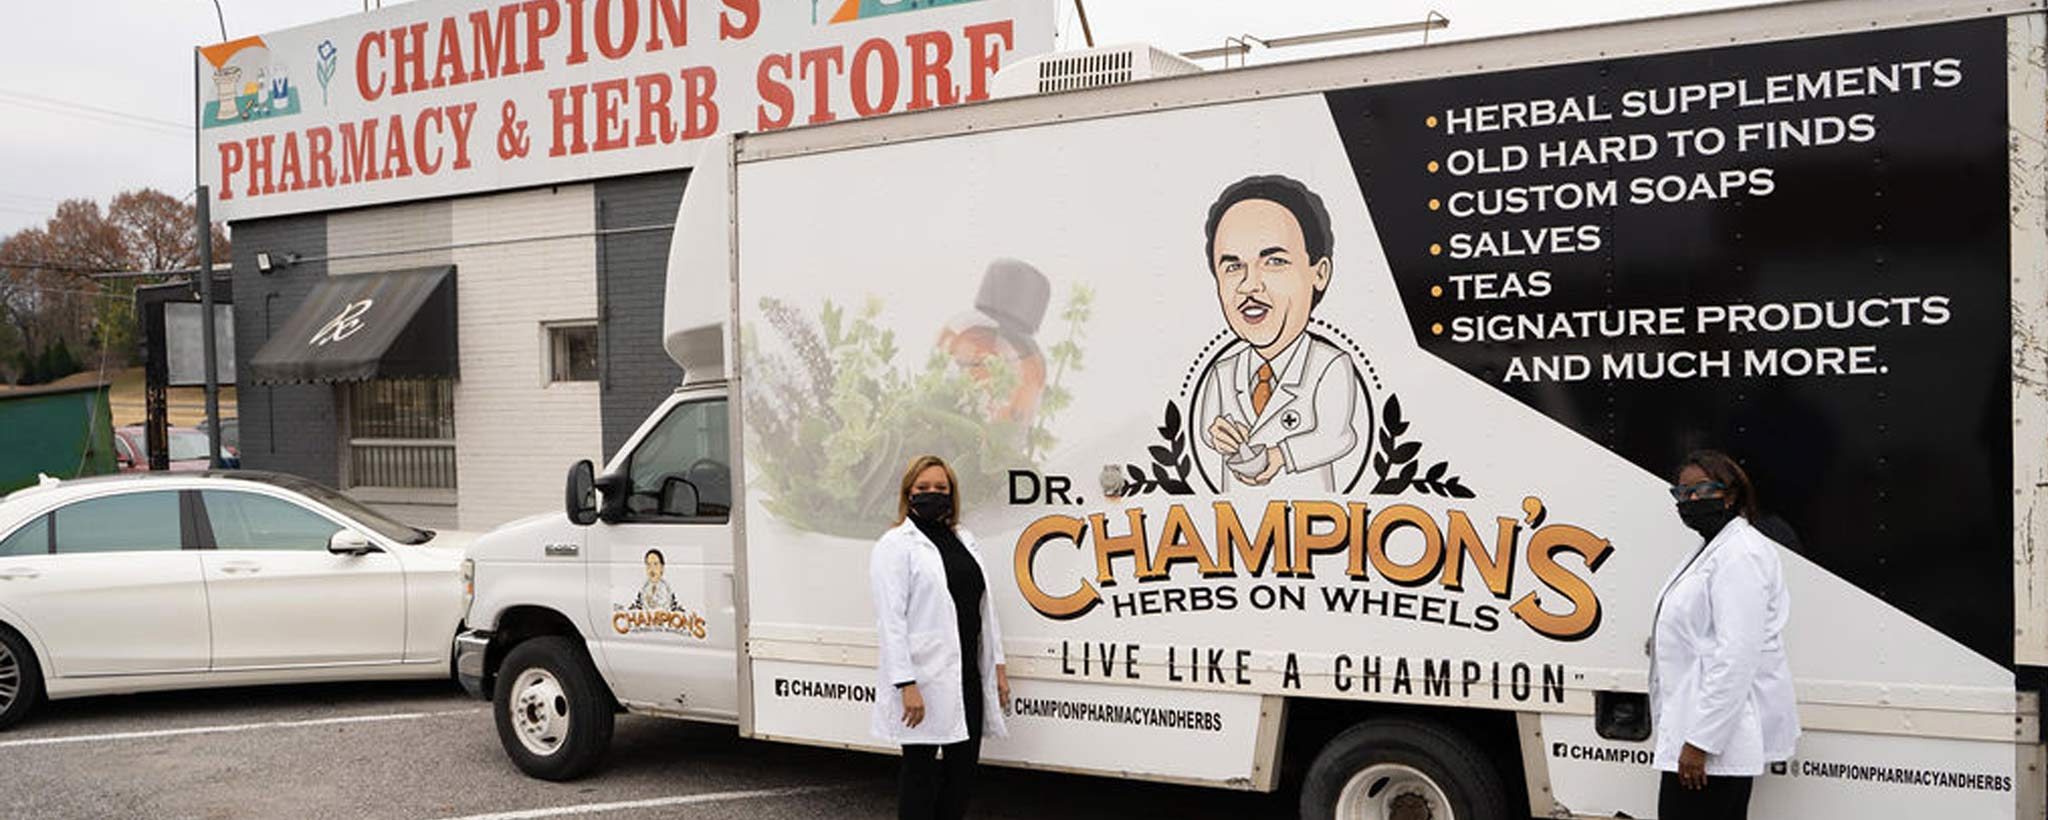 Dr. Champion's herb on wheel truck